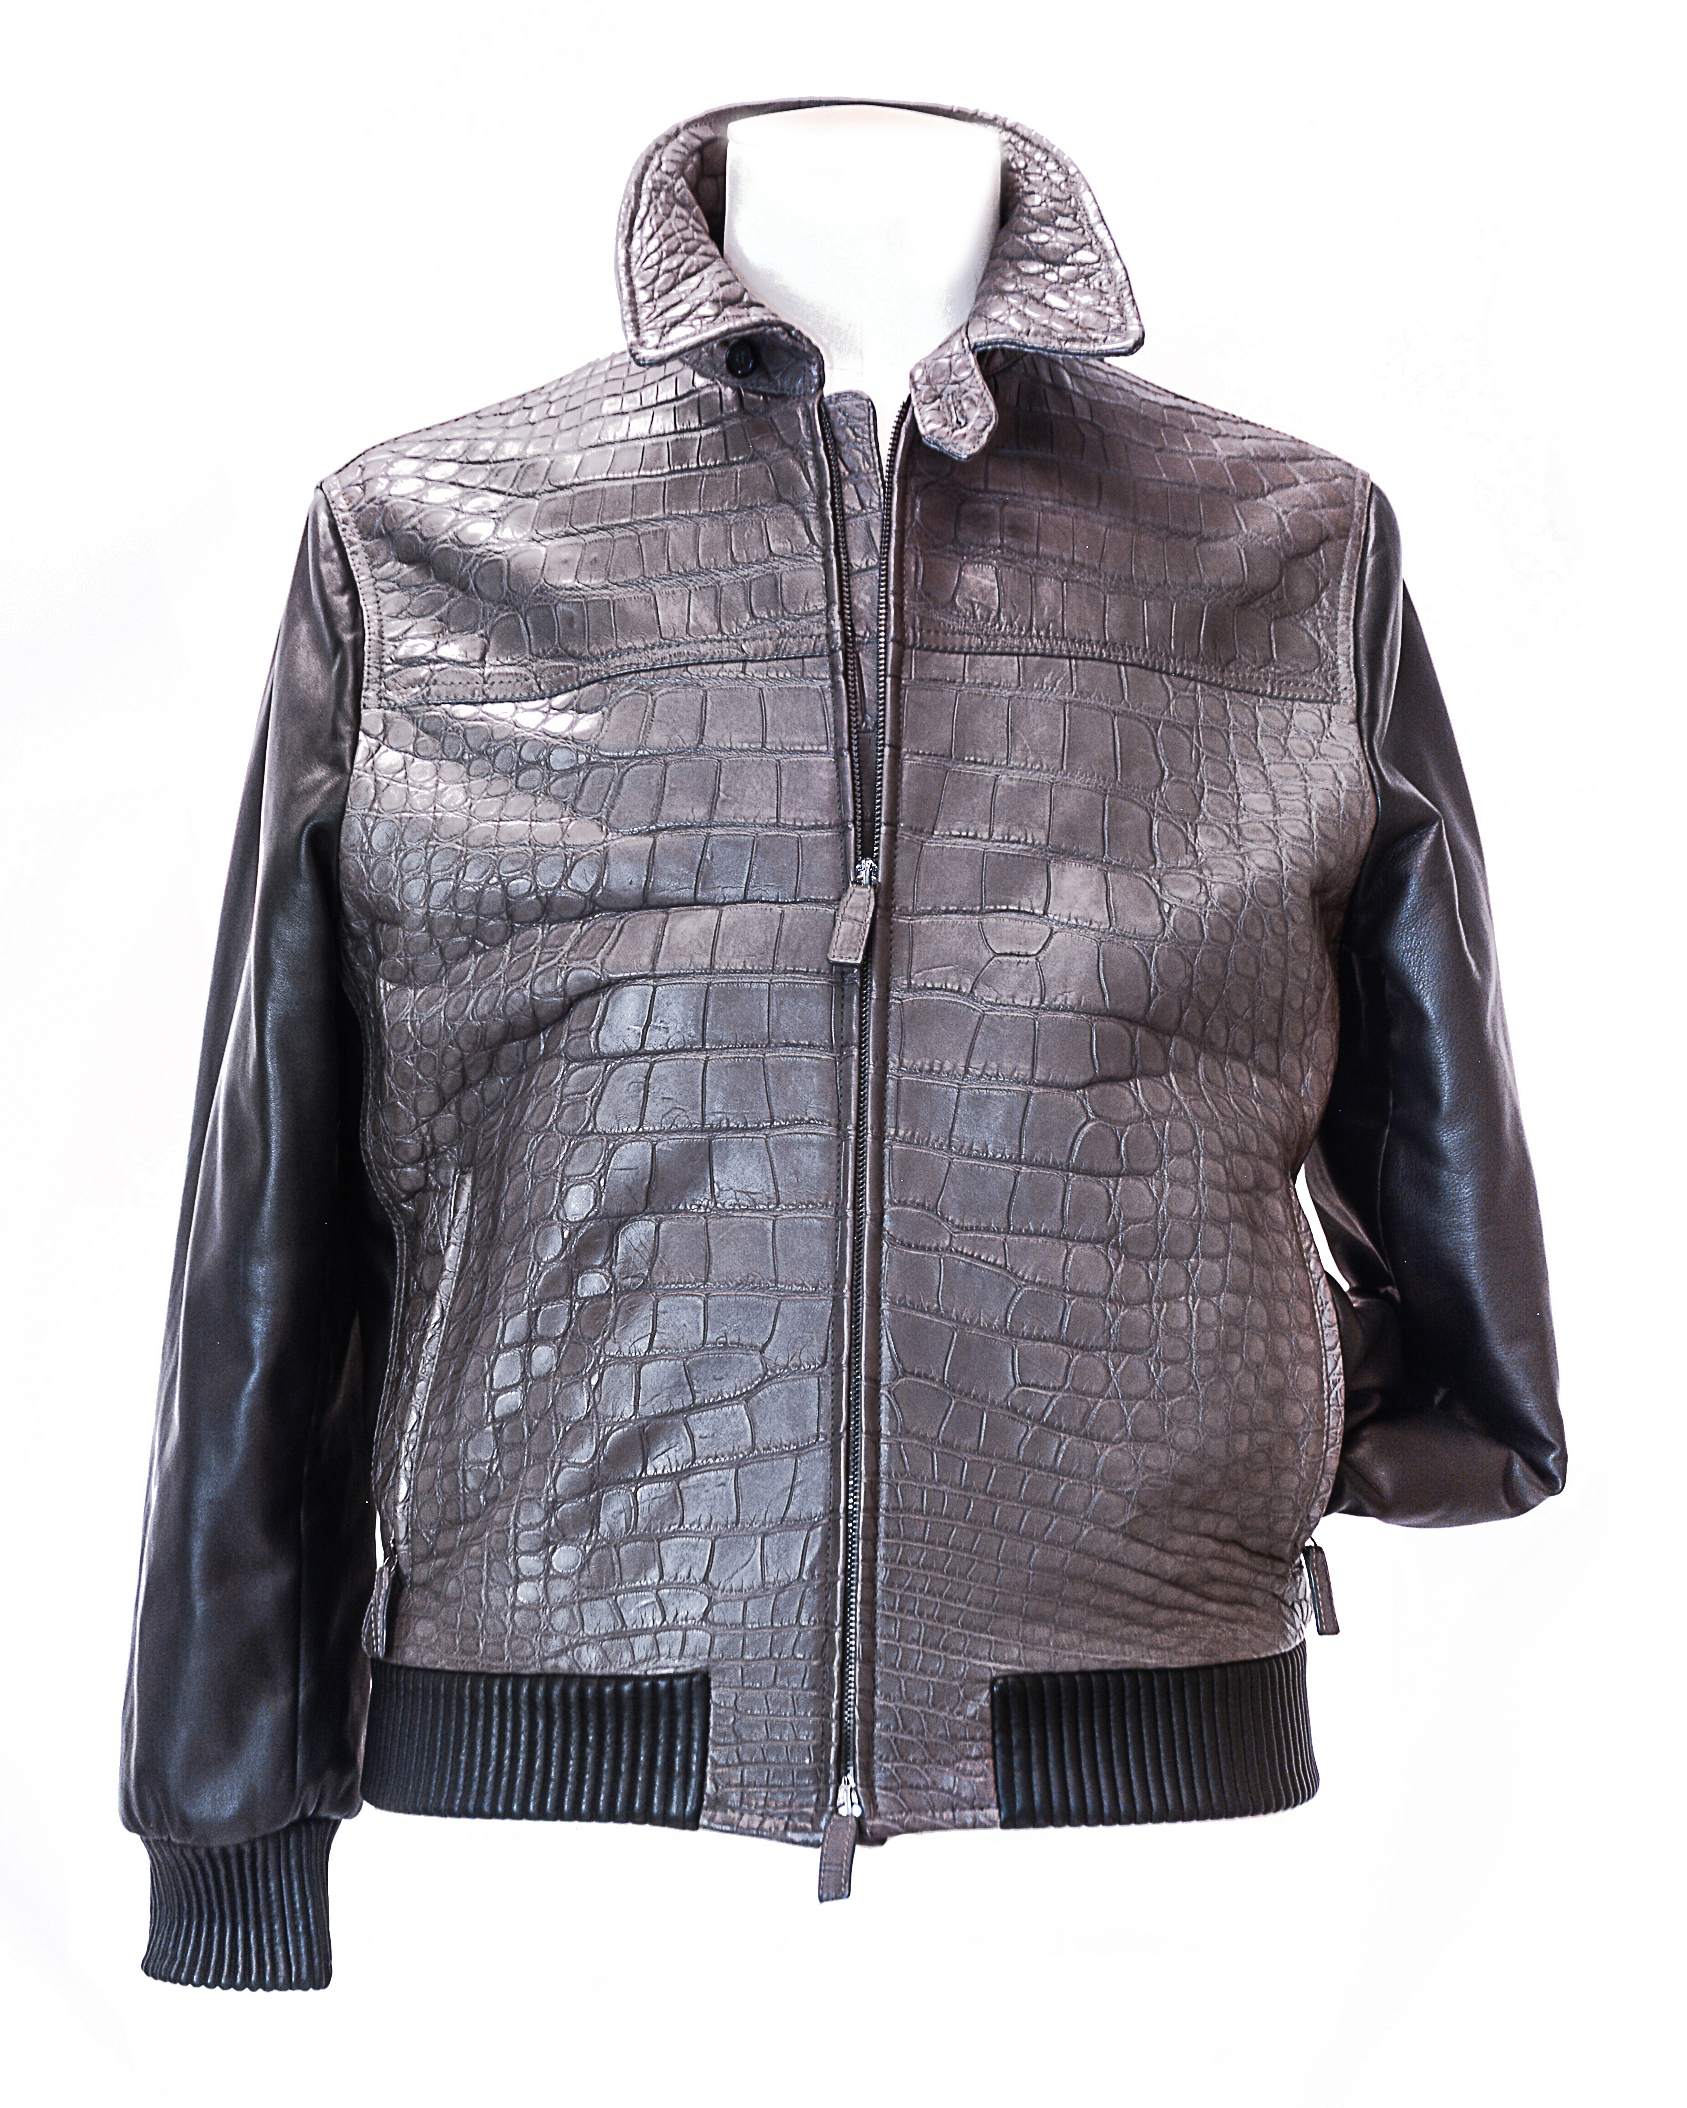 Women Real Crocodile Leather Jacket- Made To Measure - Luxury Handmade  Jacket | eBay